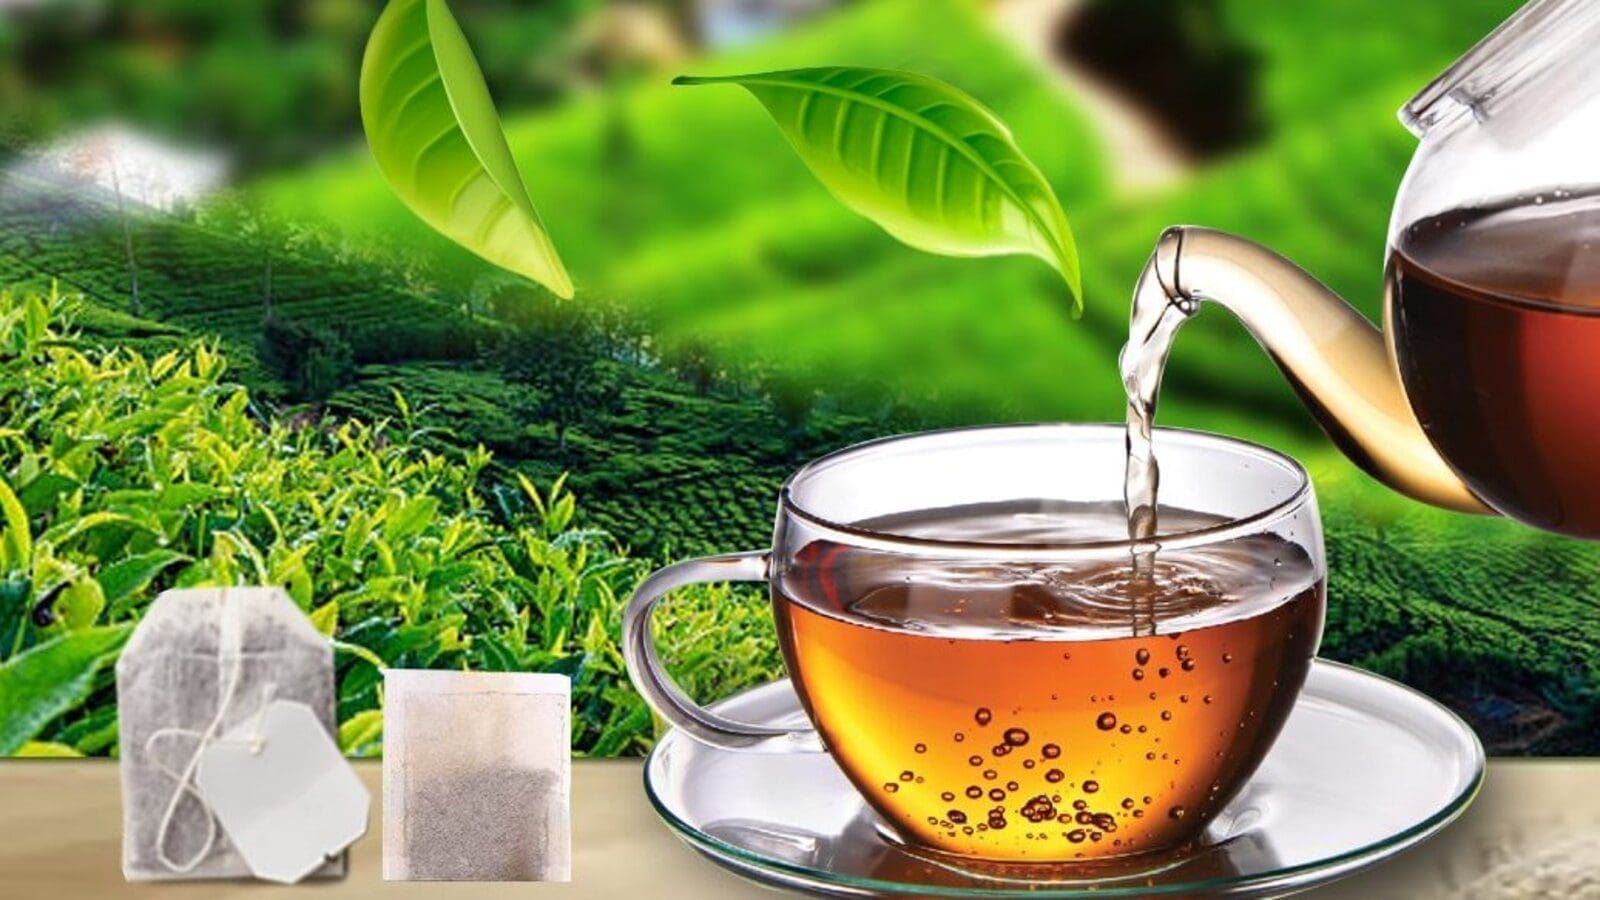 Kenya’s Tea sector achieves record earnings despite global challenges 